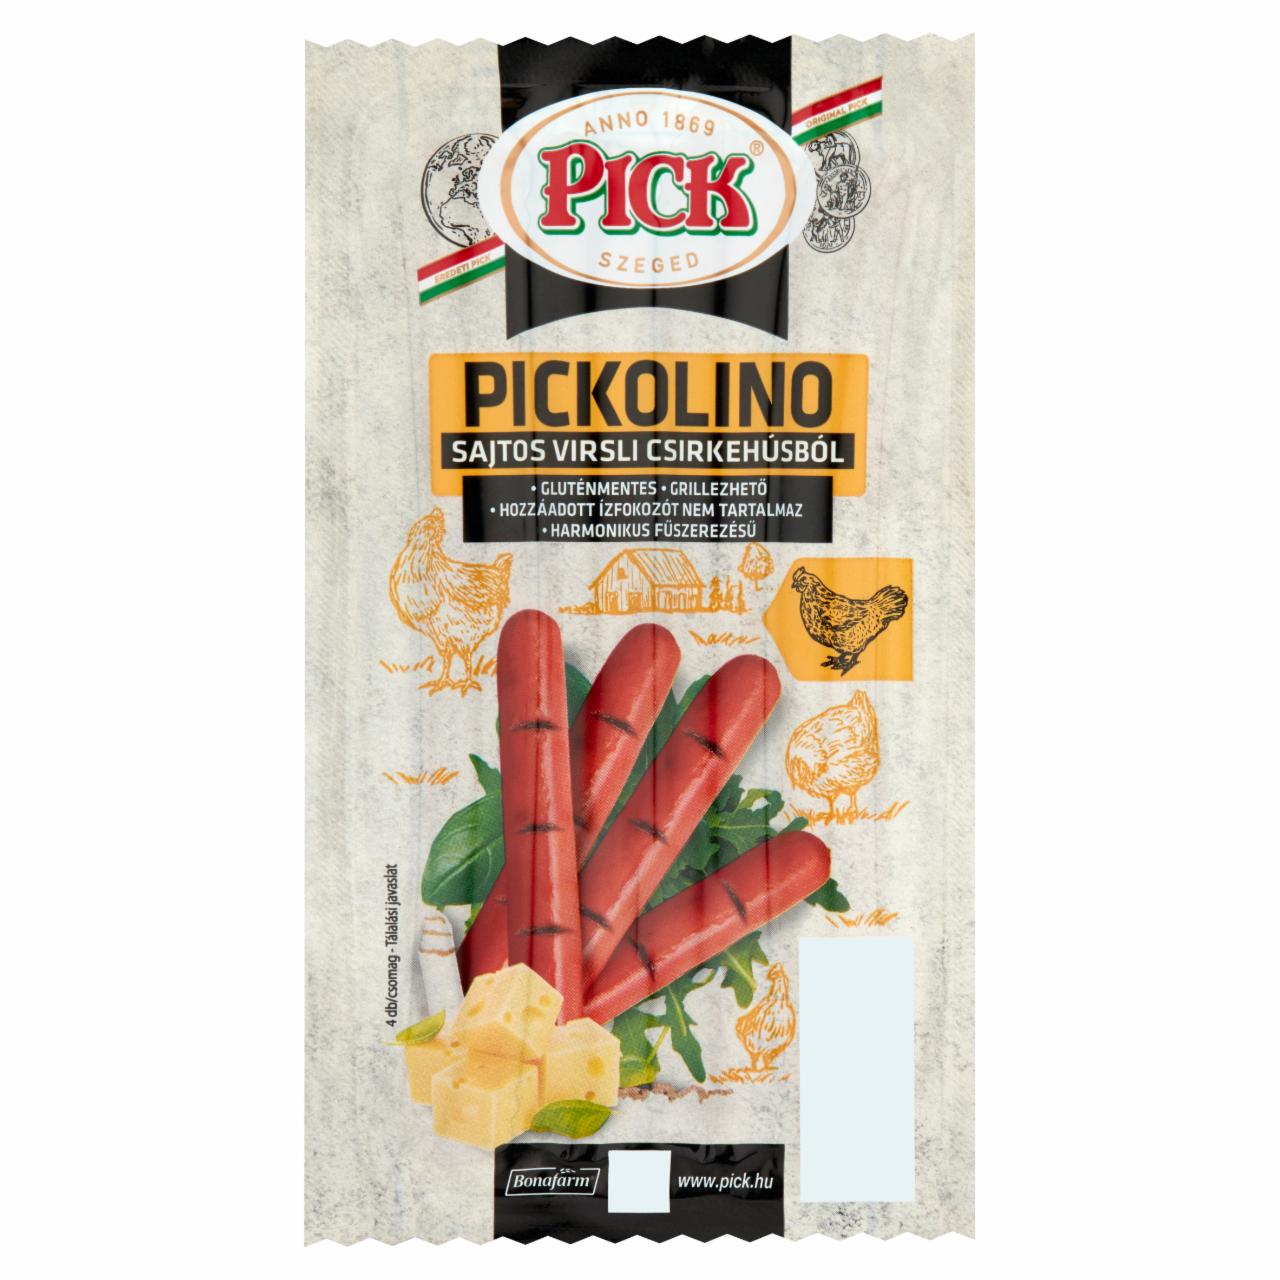 Képek - PICK Pickolino sajtos virsli csirkehúsból 140 g